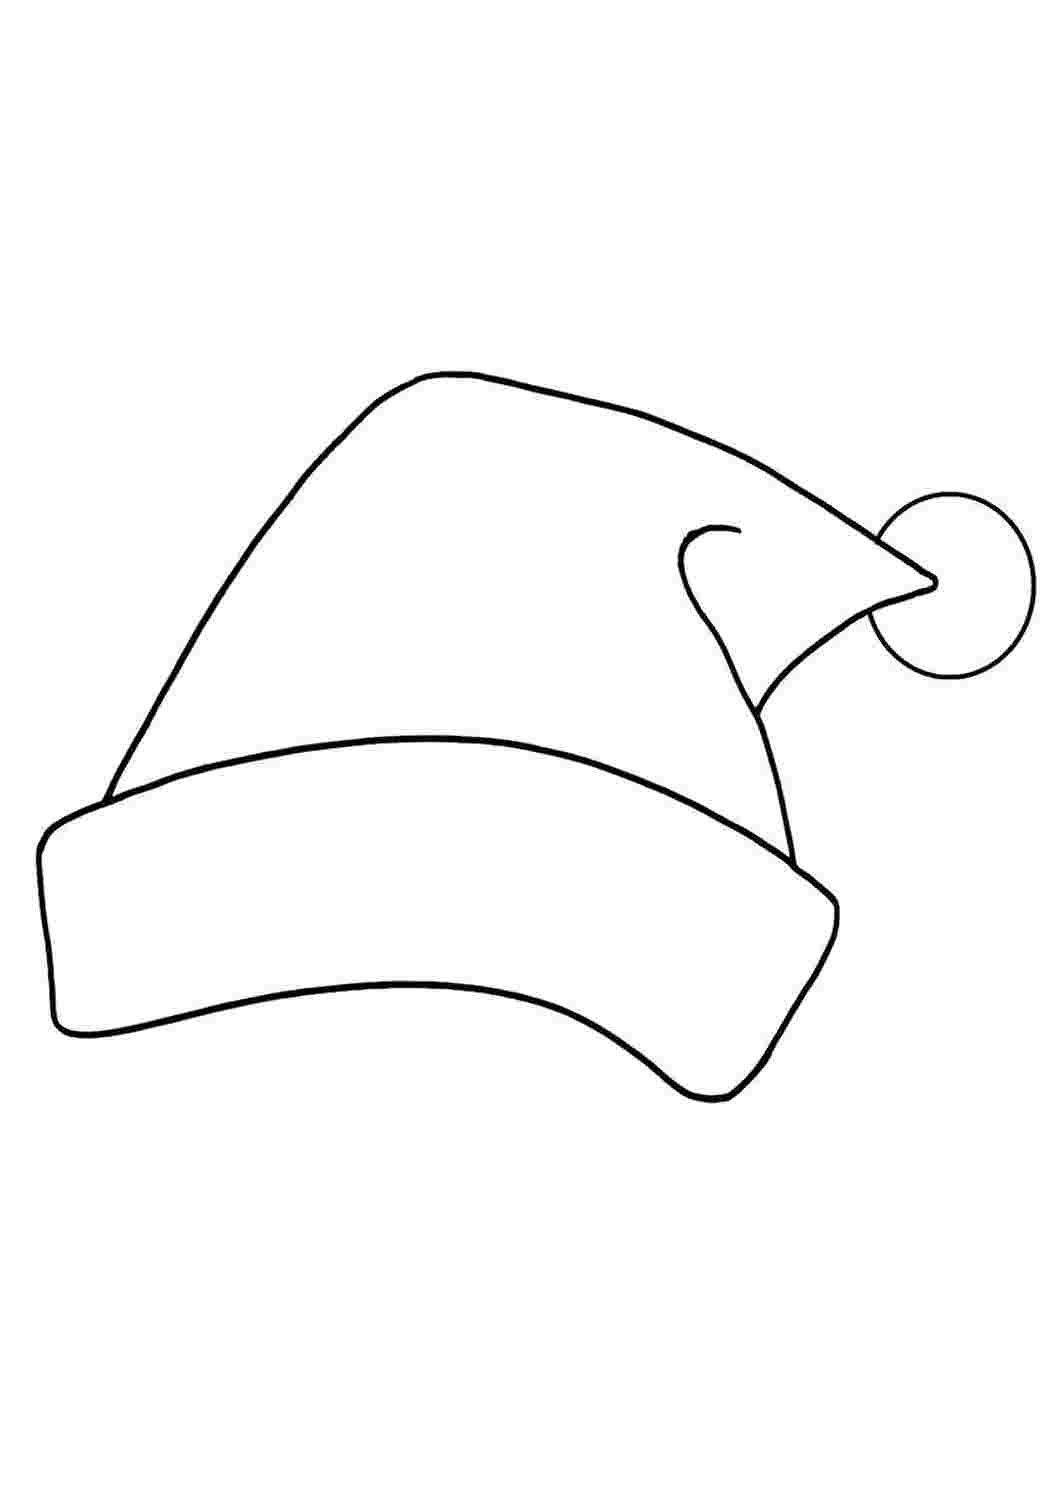 Santa Claus hat #1